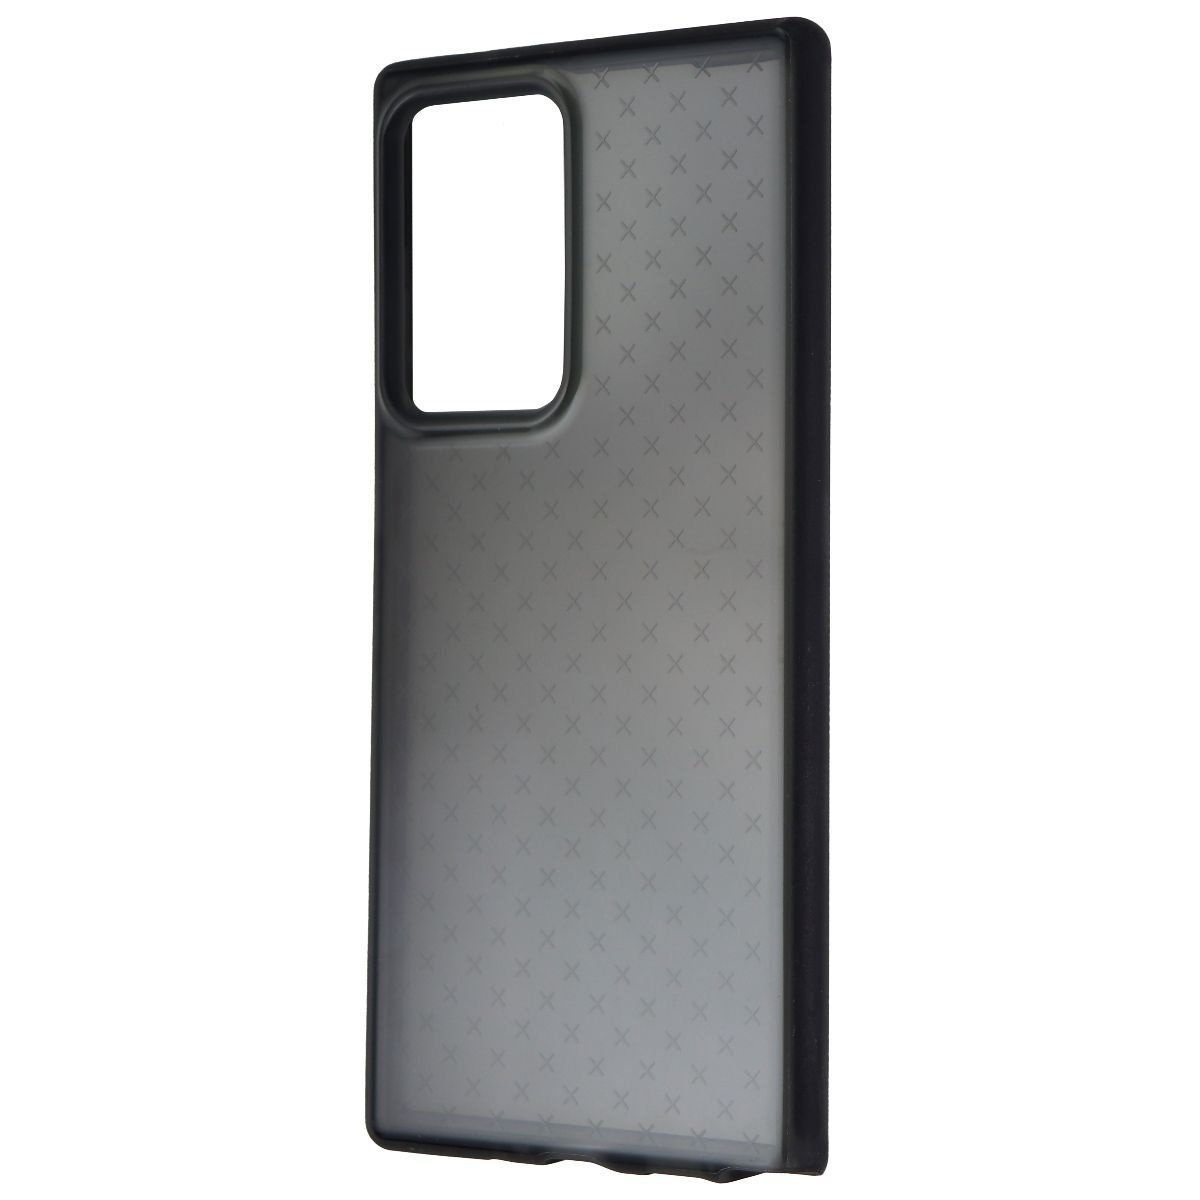 Tech21 Evo Check Gel Case For Samsung Galaxy Note20 Ultra - Smokey Black